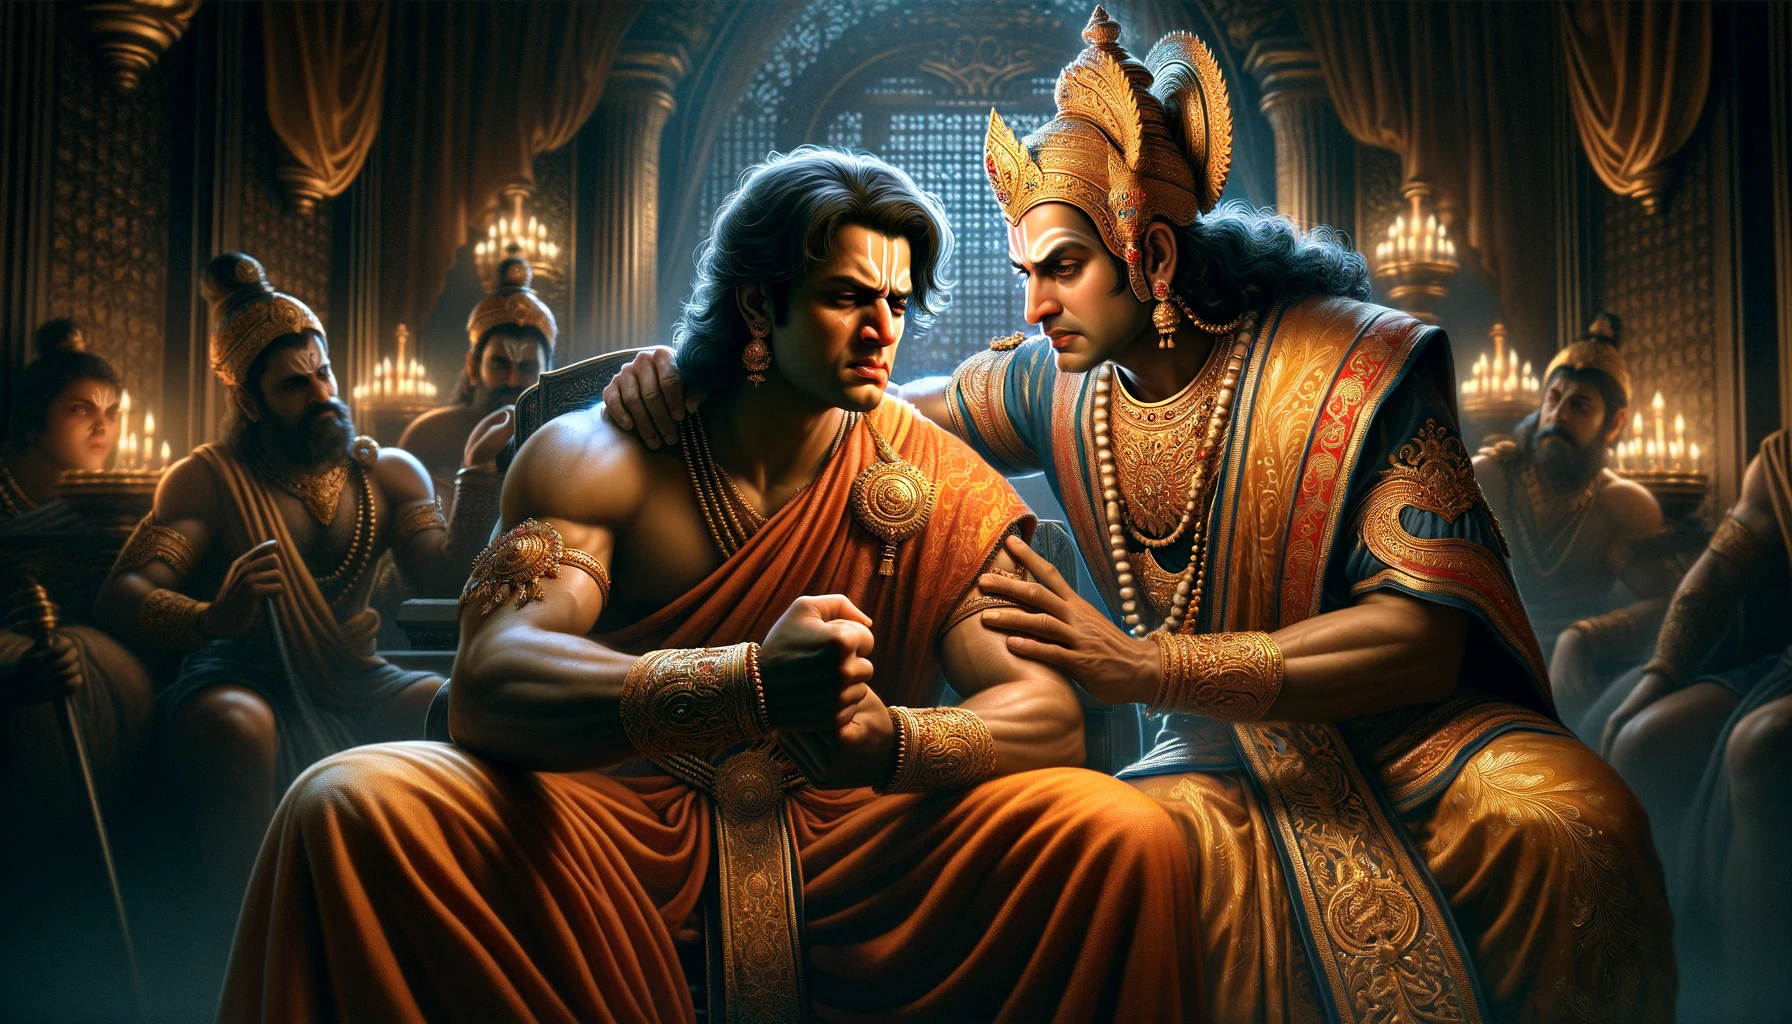 Rama Attributes His Misfortune to Destiny